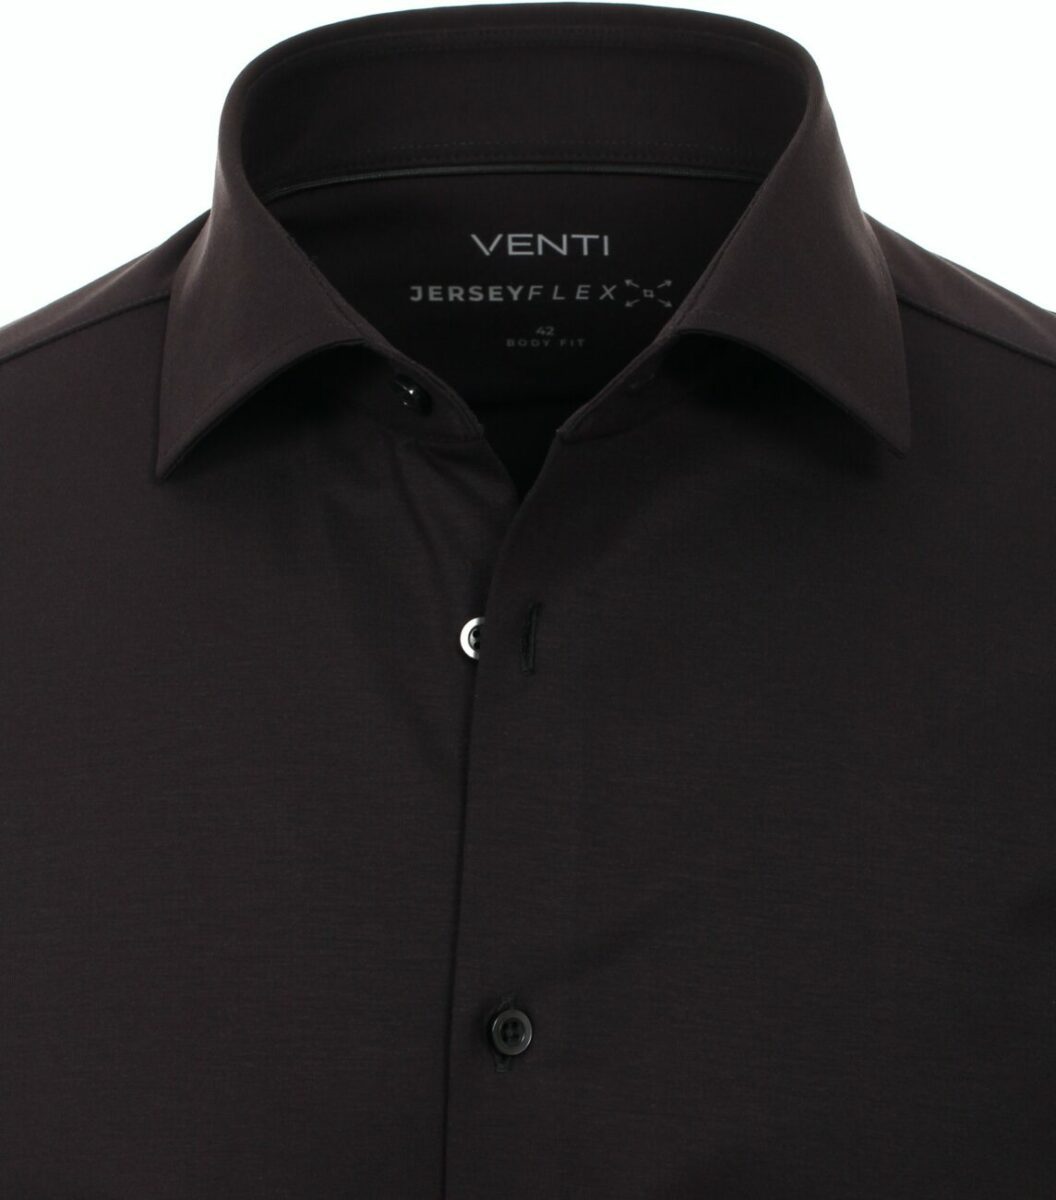 Zwart Venti Jerseyflex Overhemd Body Fit 123955800-800 (1)